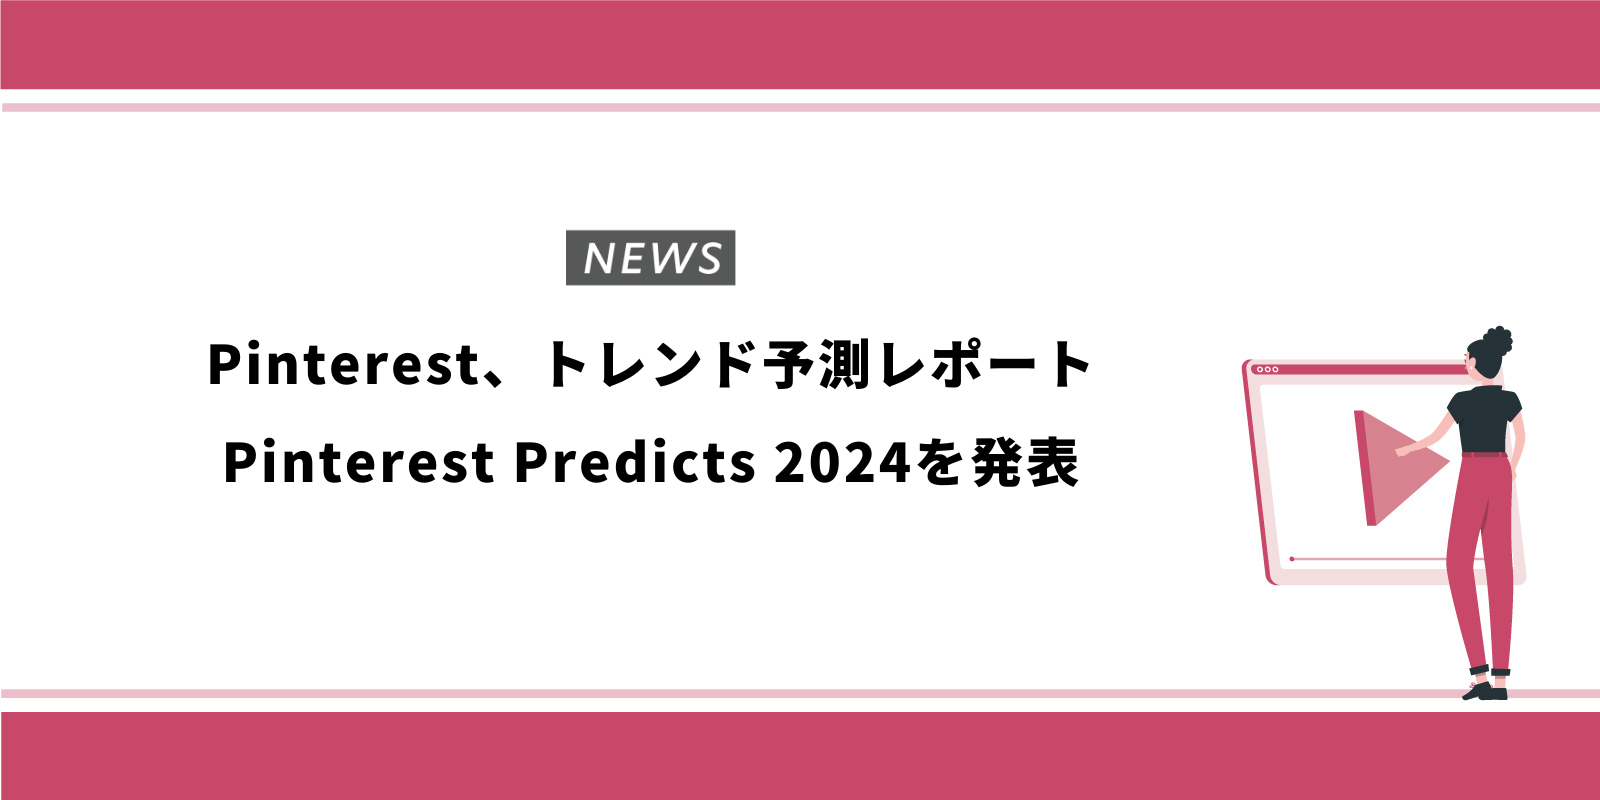 Pinterest、トレンド予測レポートPinterest Predicts 2024を発表